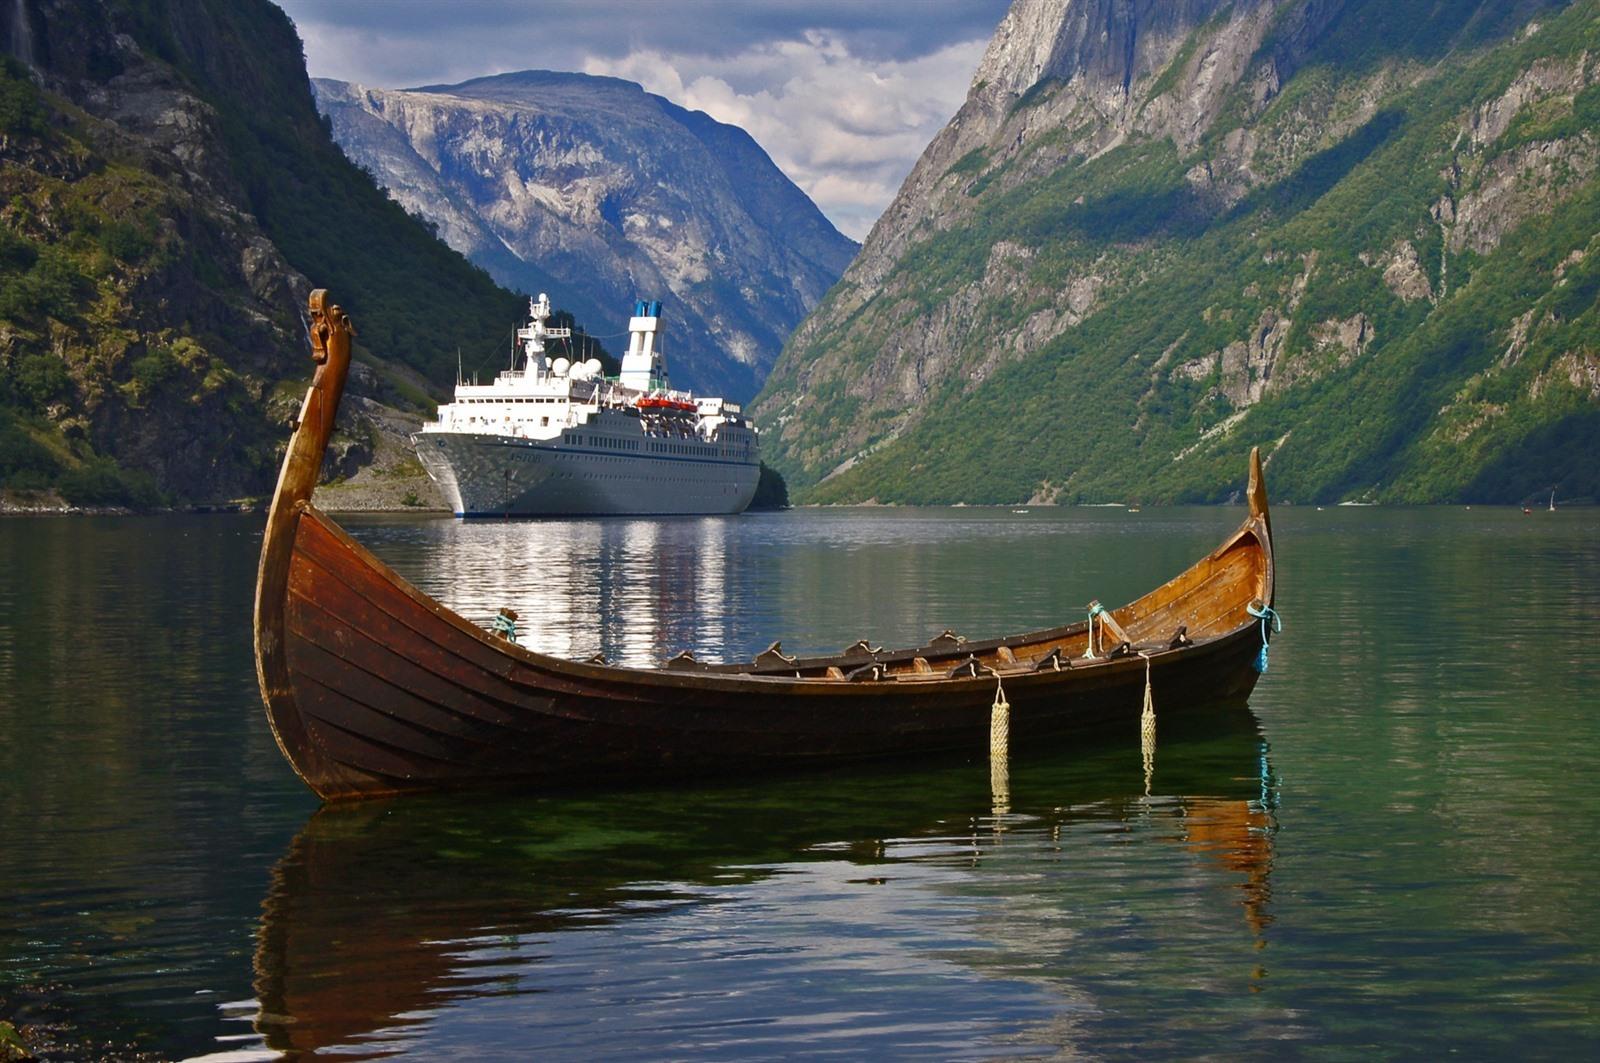 cruise noorwegen met annemie struyf